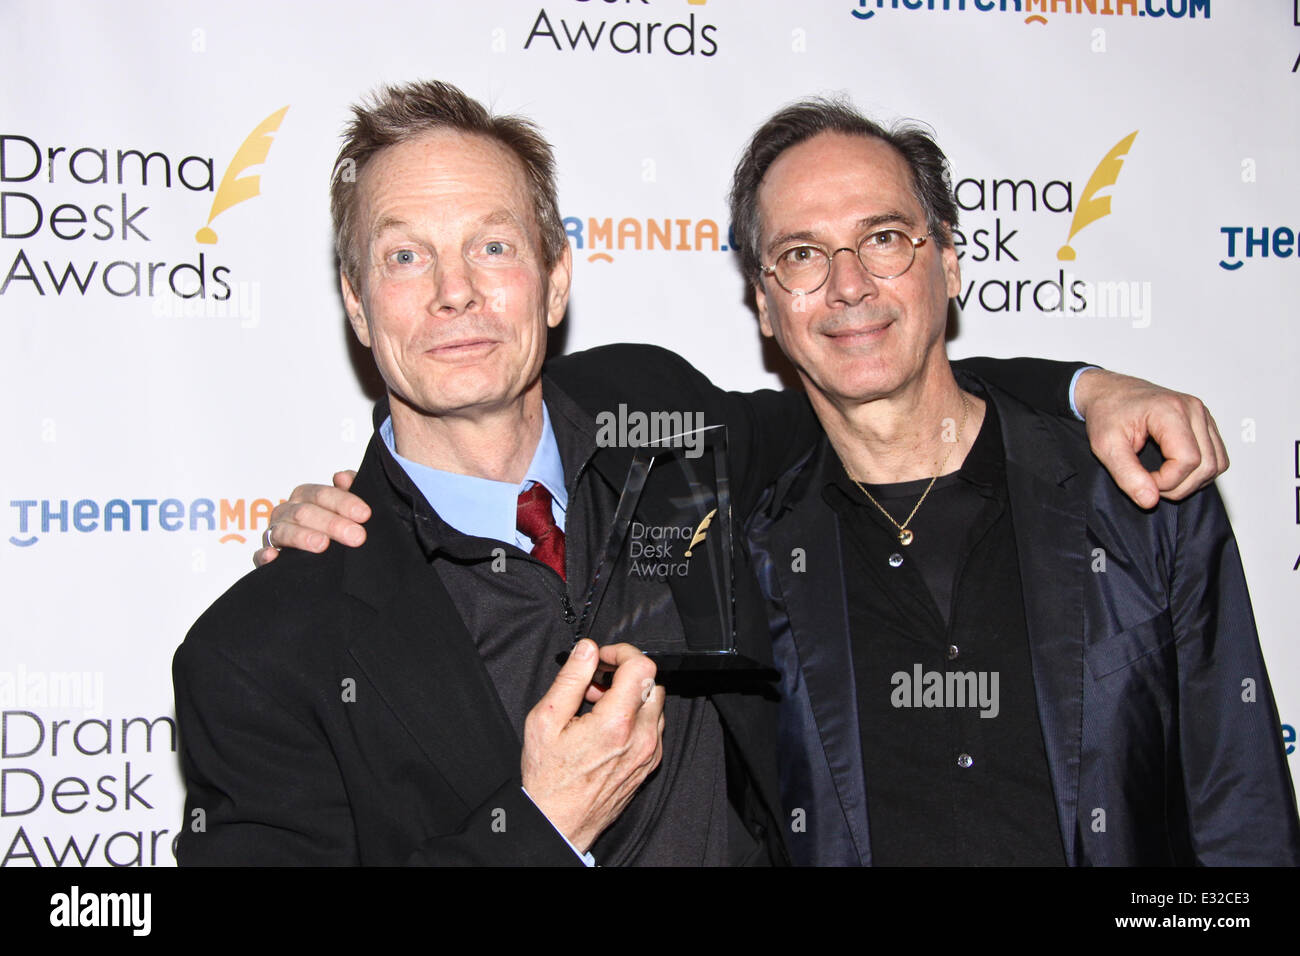 2013 Drama Desk Awards - Press Room  Featuring: Bill Erwin,David Shiner Where: New York City, New York, United States When: 19 May 2013 Stock Photo